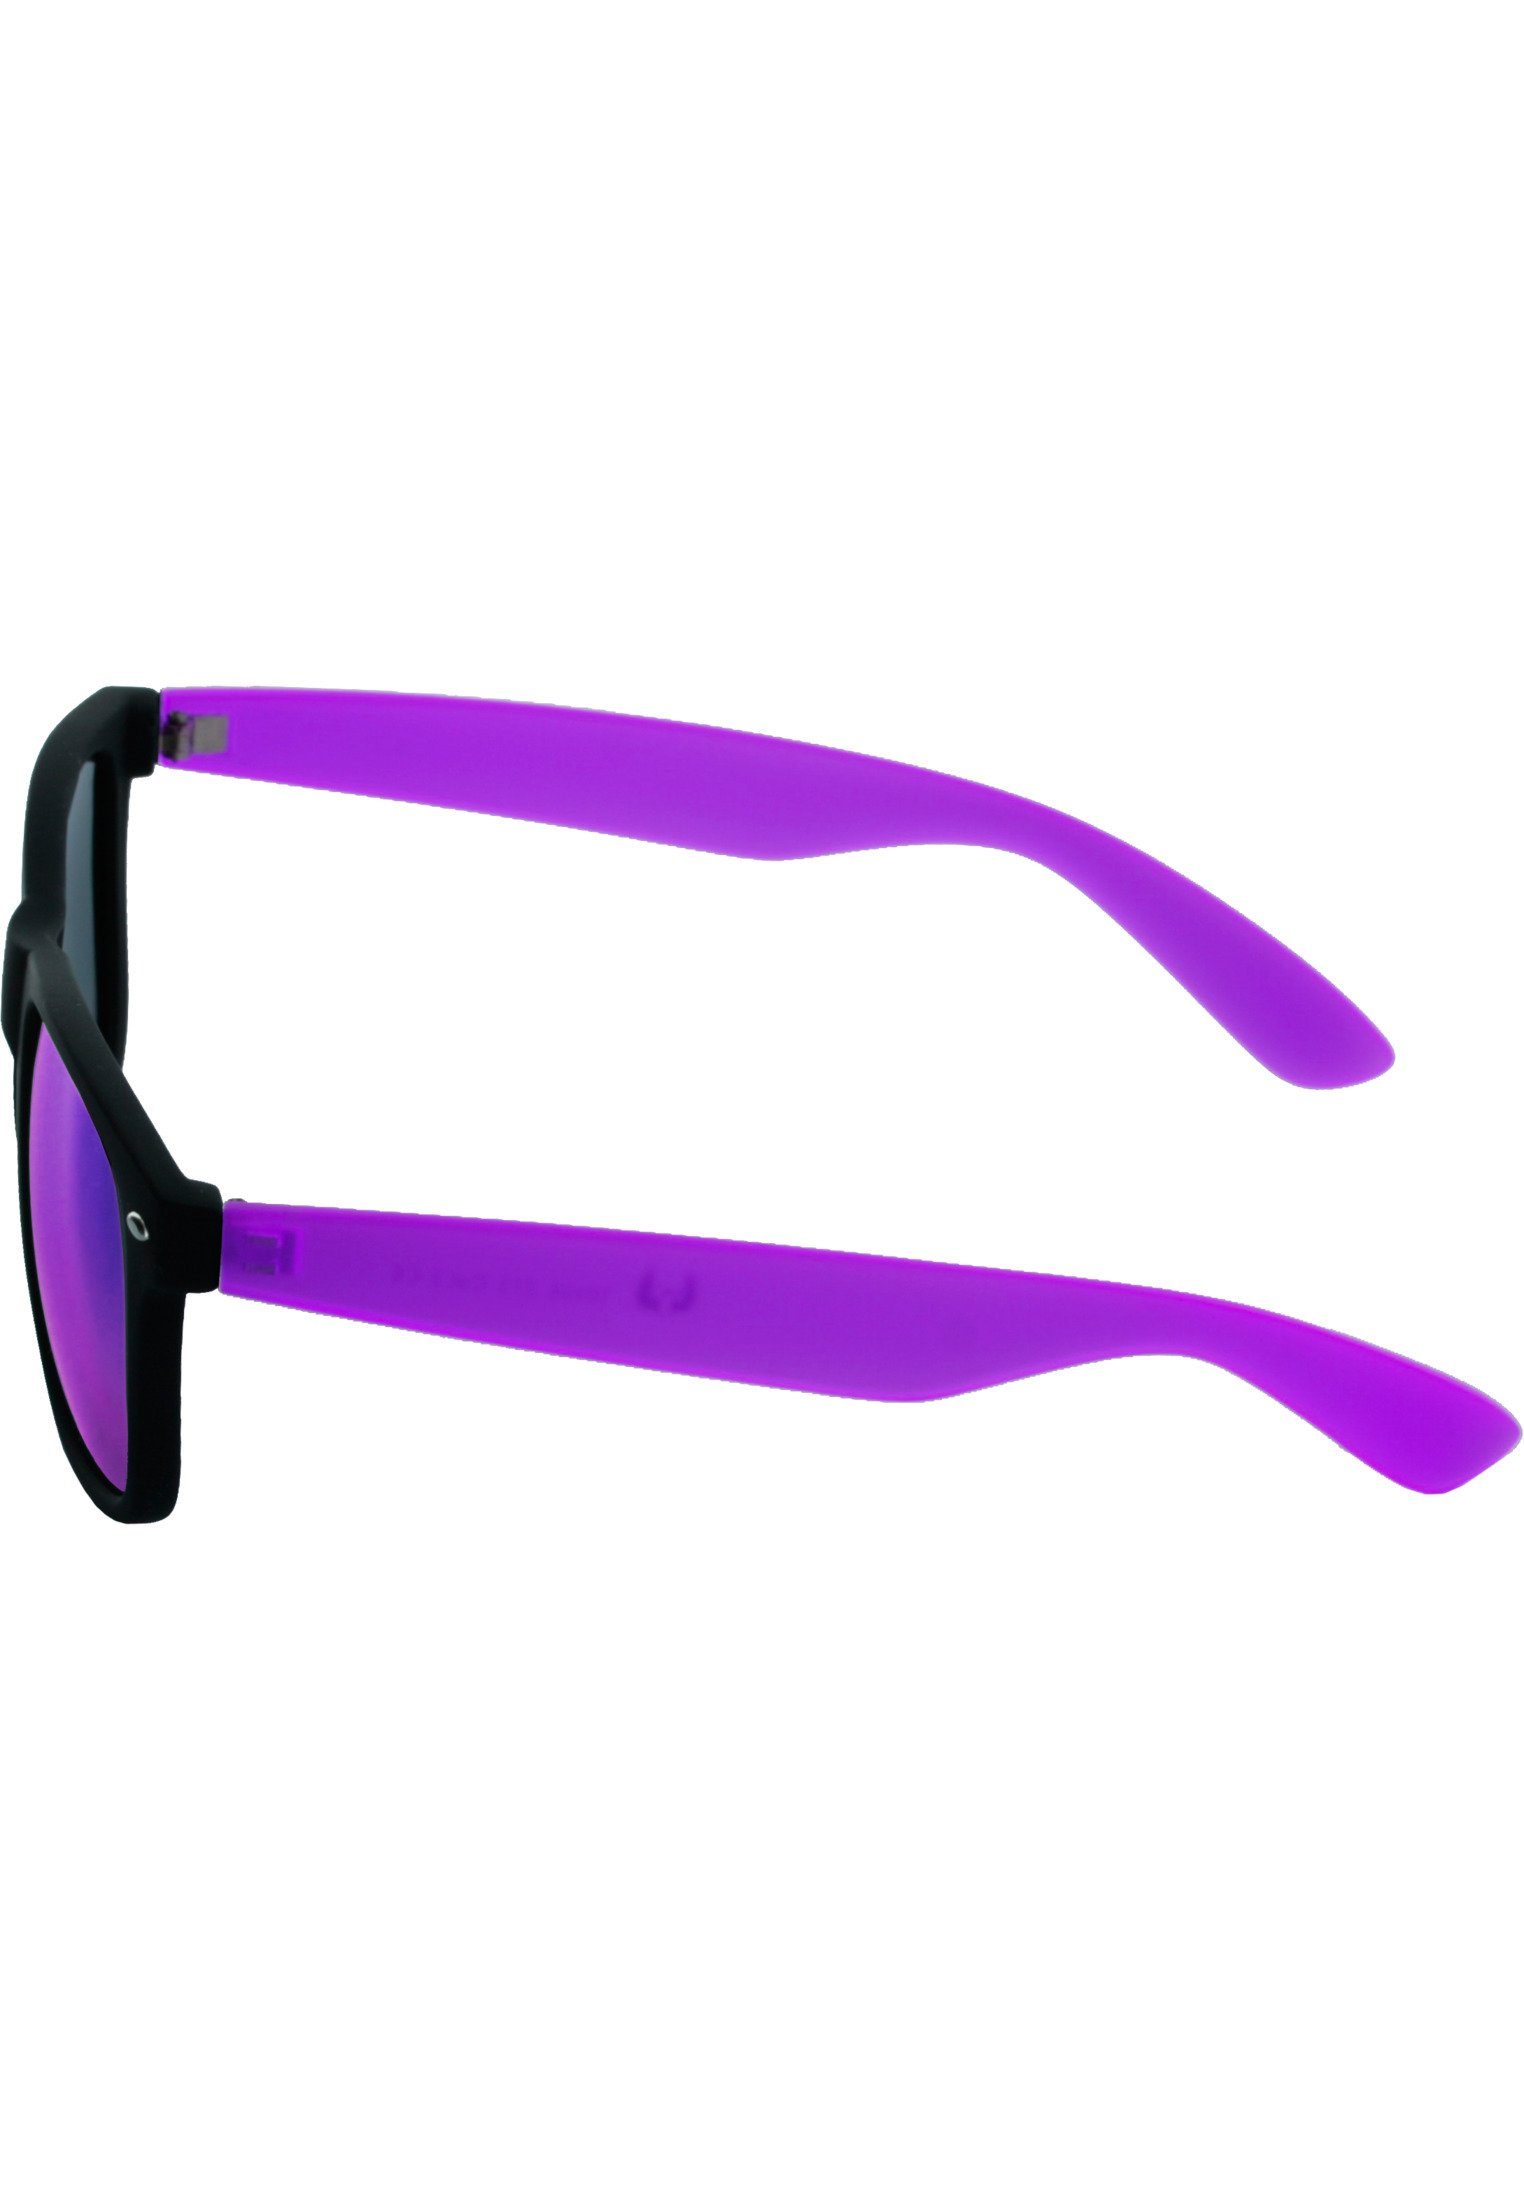 Sonnenbrille Mirror Likoma Accessoires Sunglasses blk/pur/pur MSTRDS